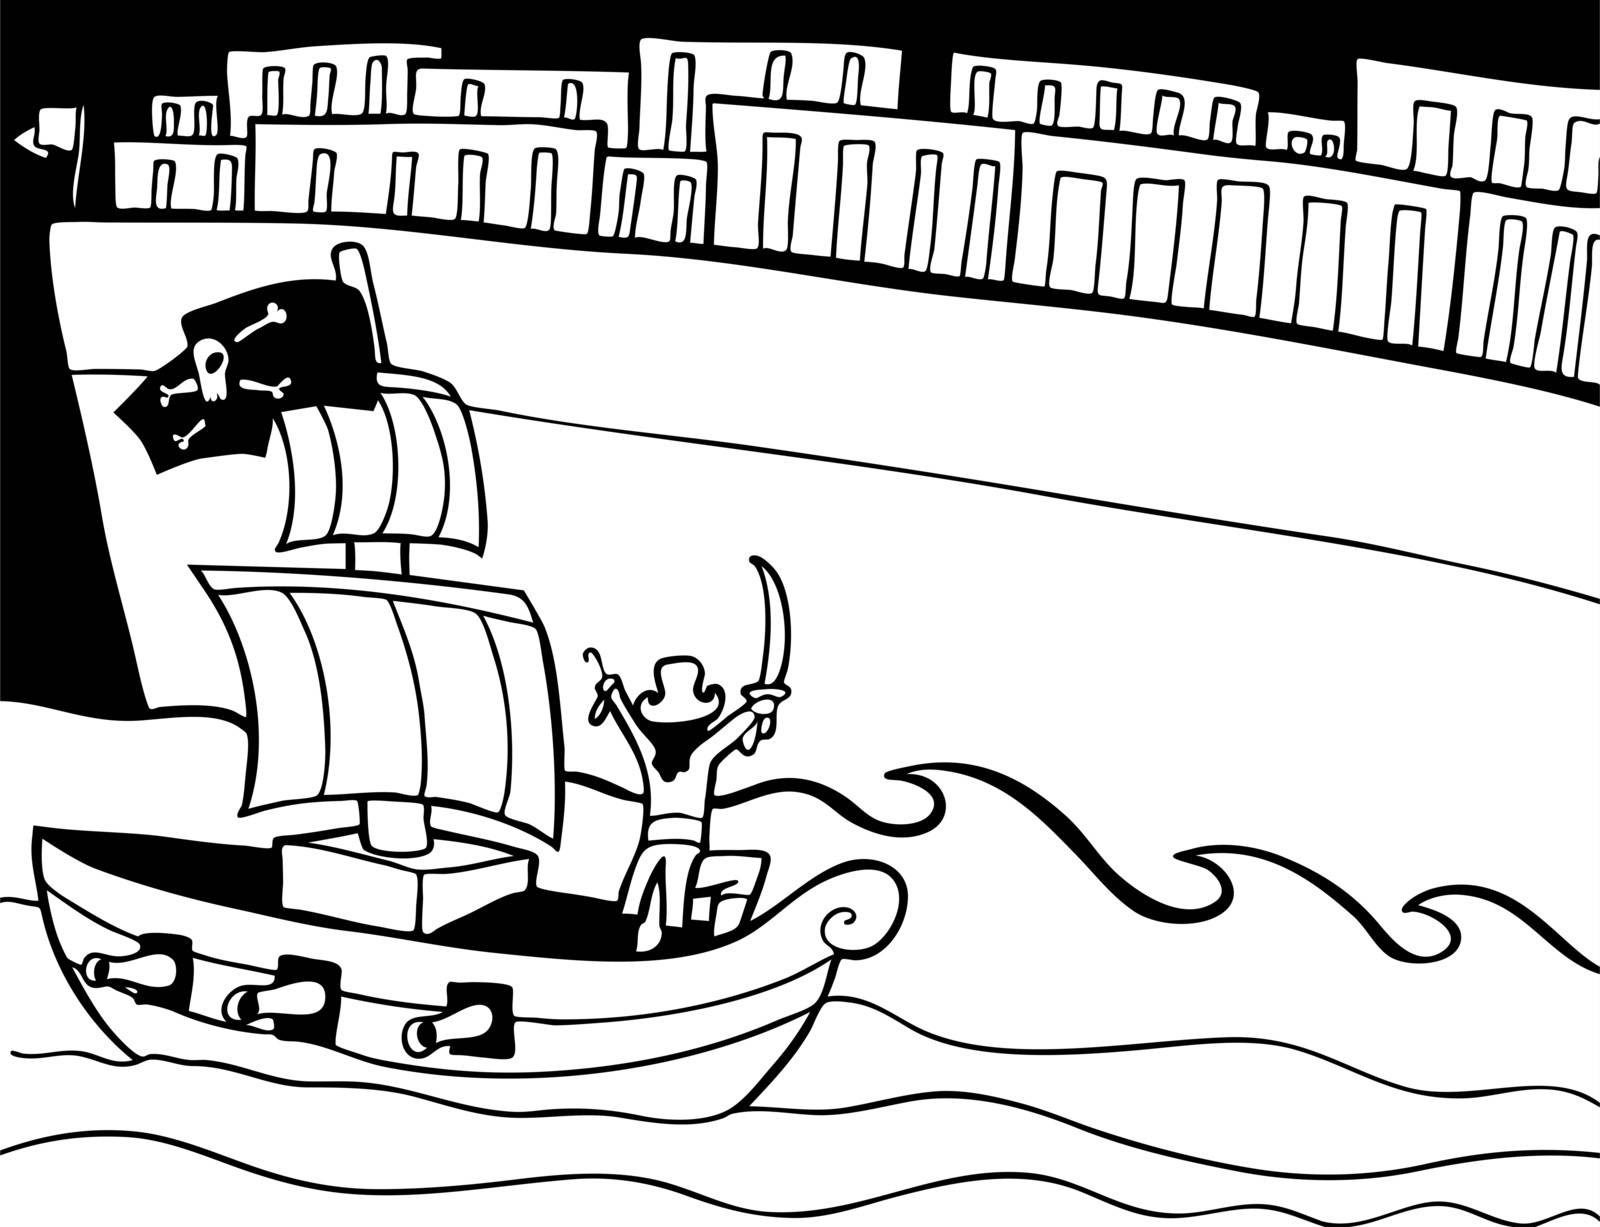 Image of pirates attacking a cargo ship.